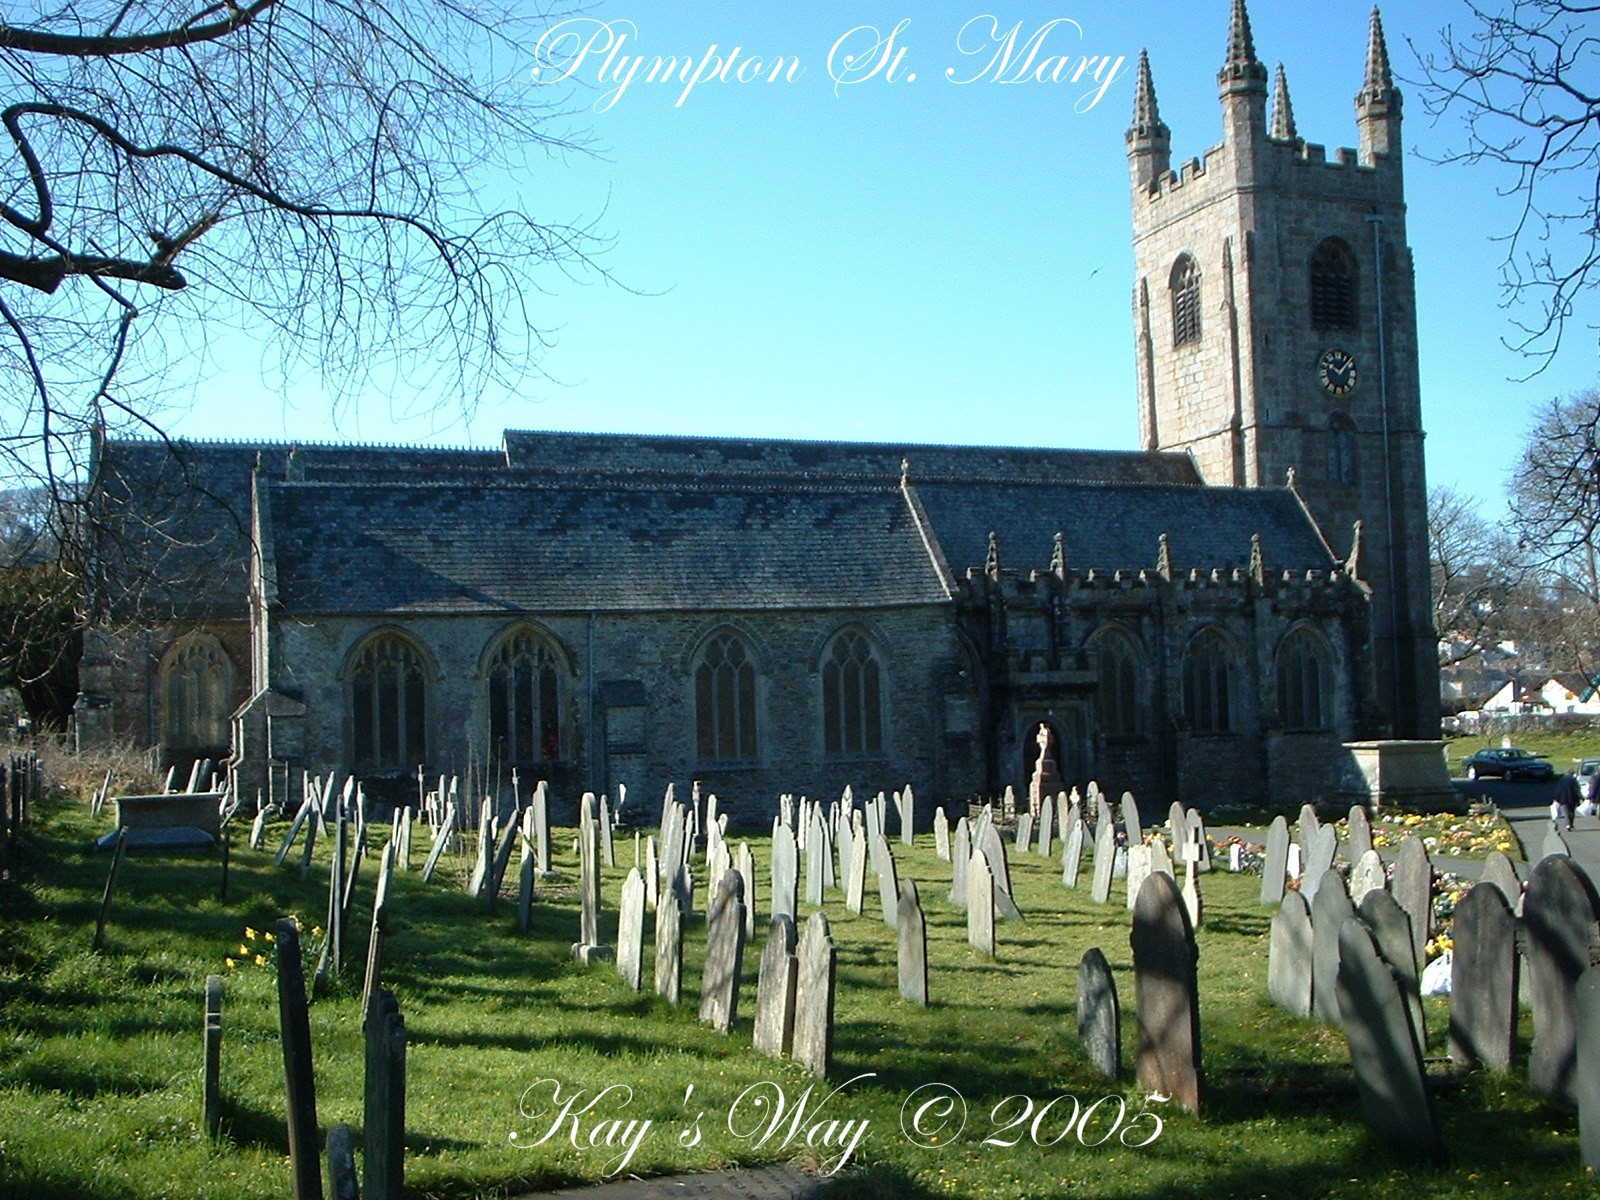 Plympton St Marys Church Plympton Plymouth Devon England